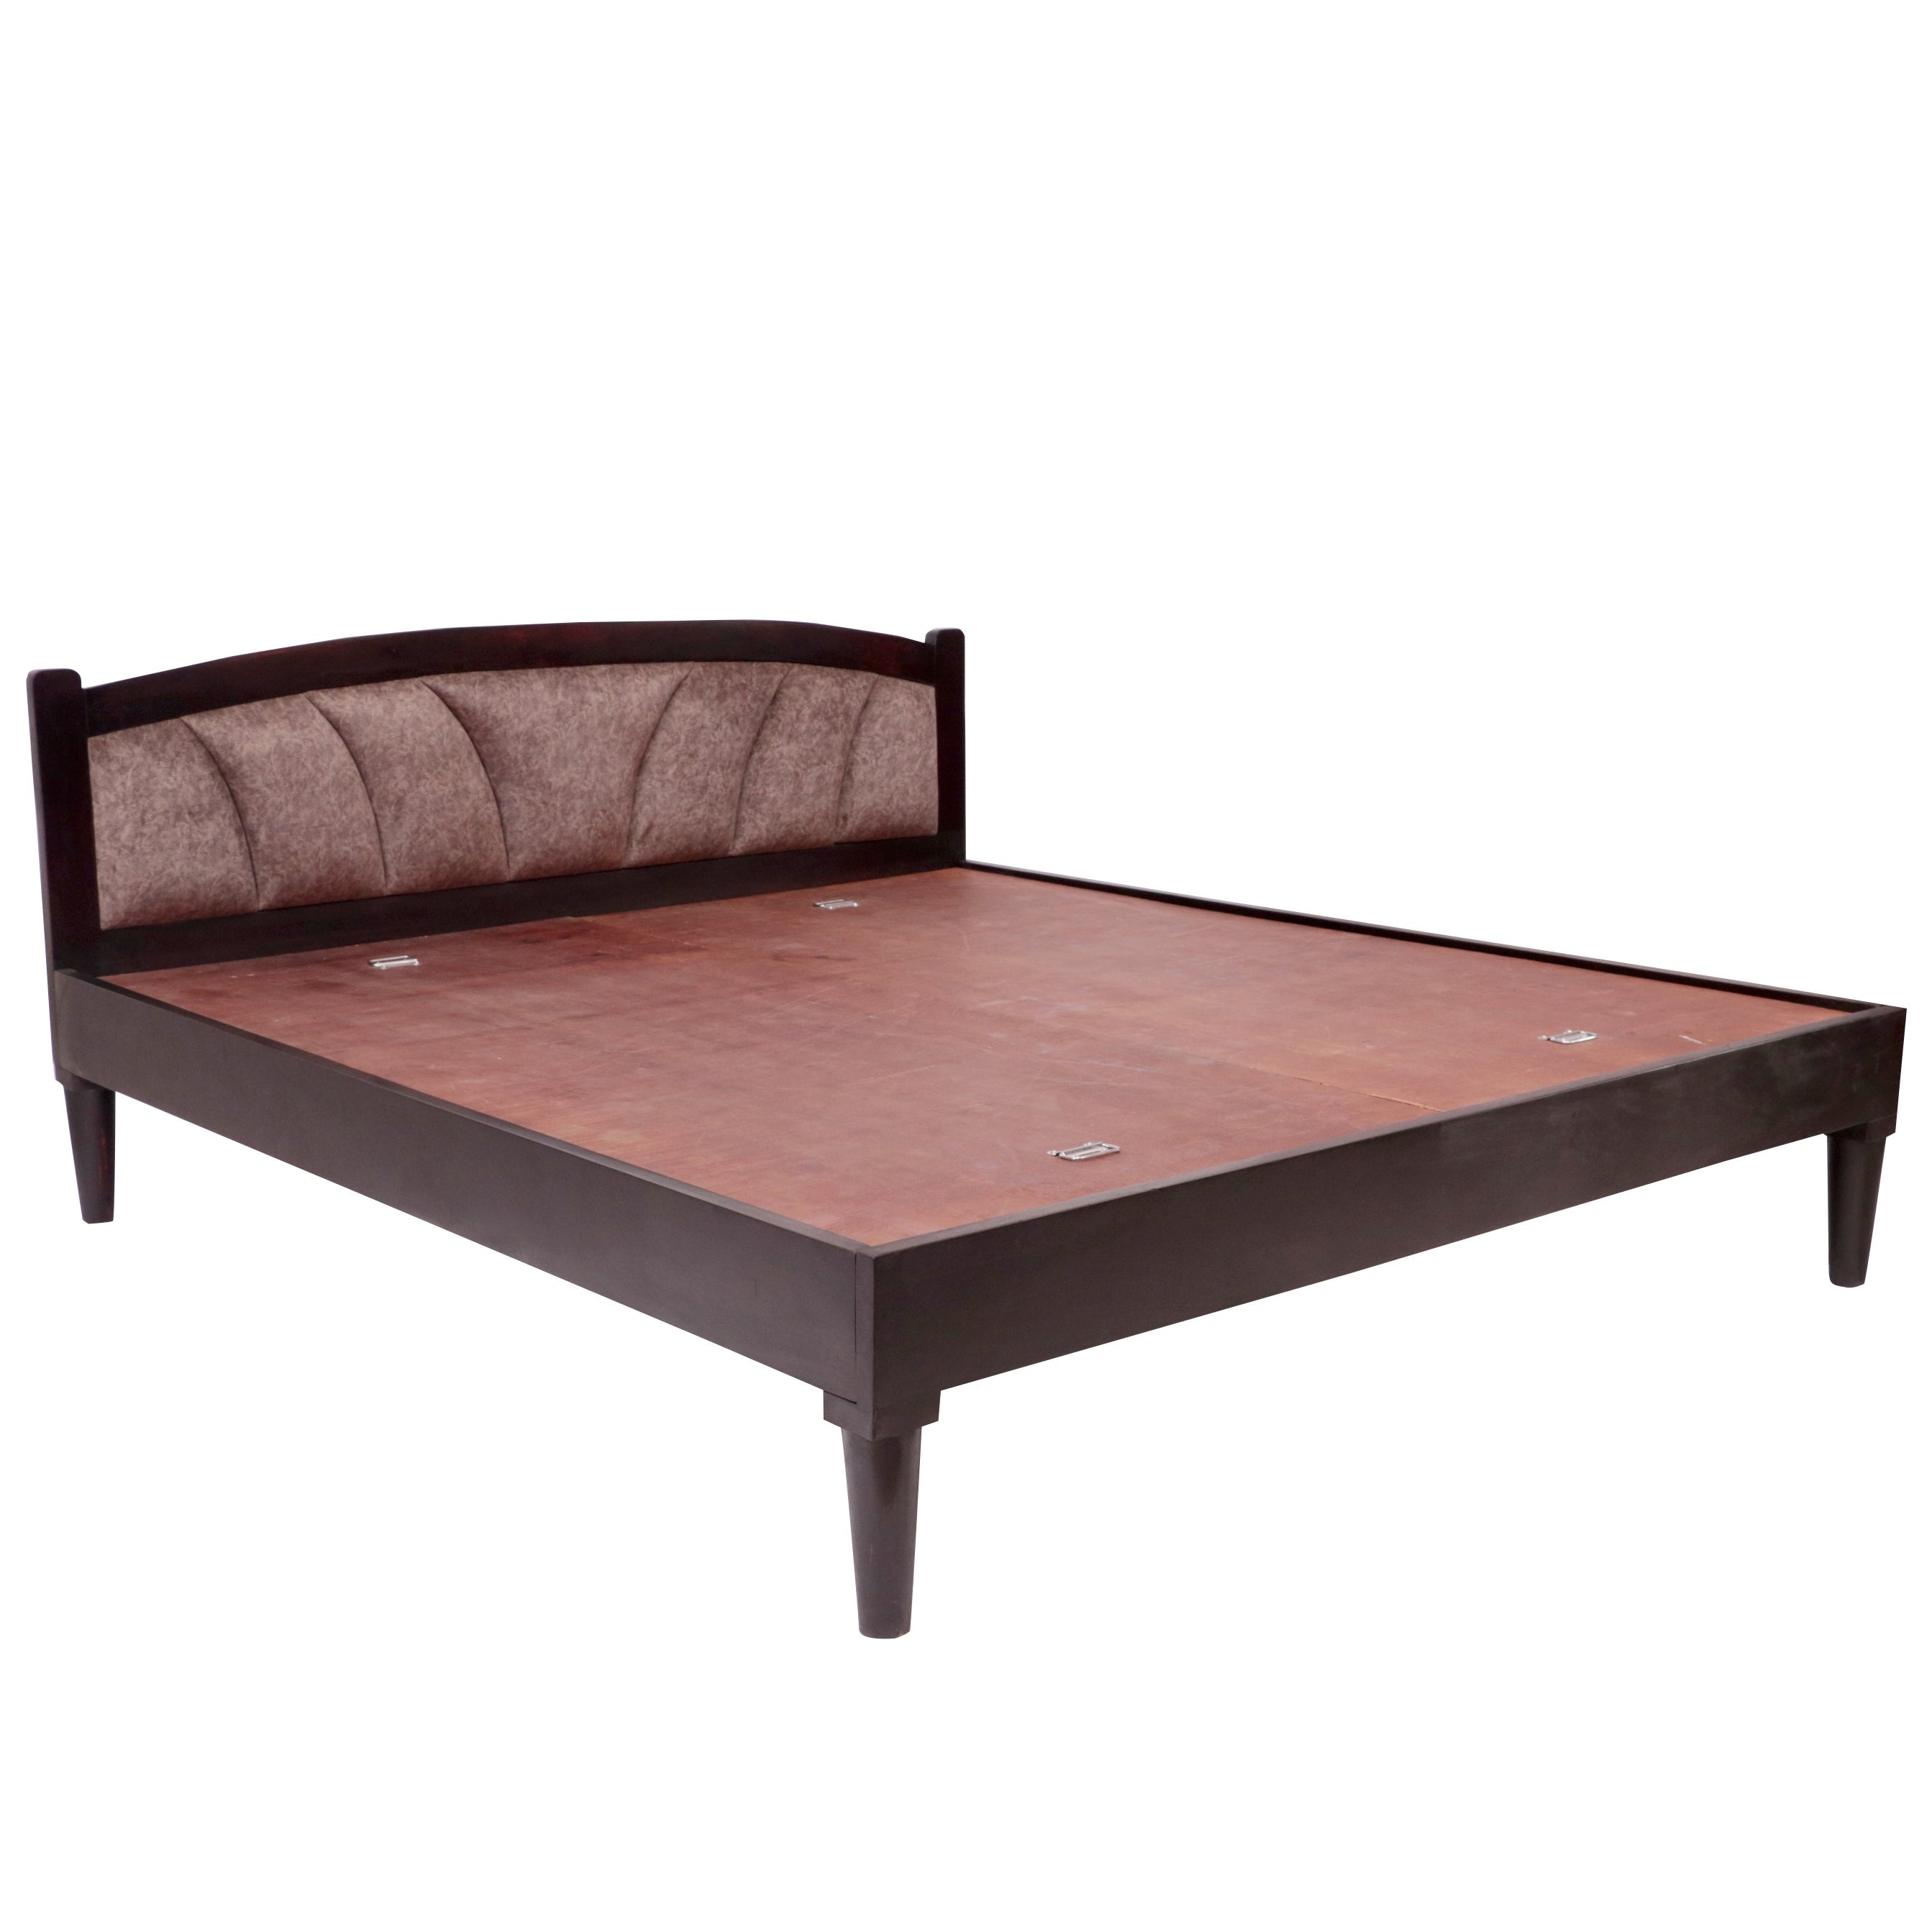 Teak wood Upholstered Bed Sheesham Wood Bed